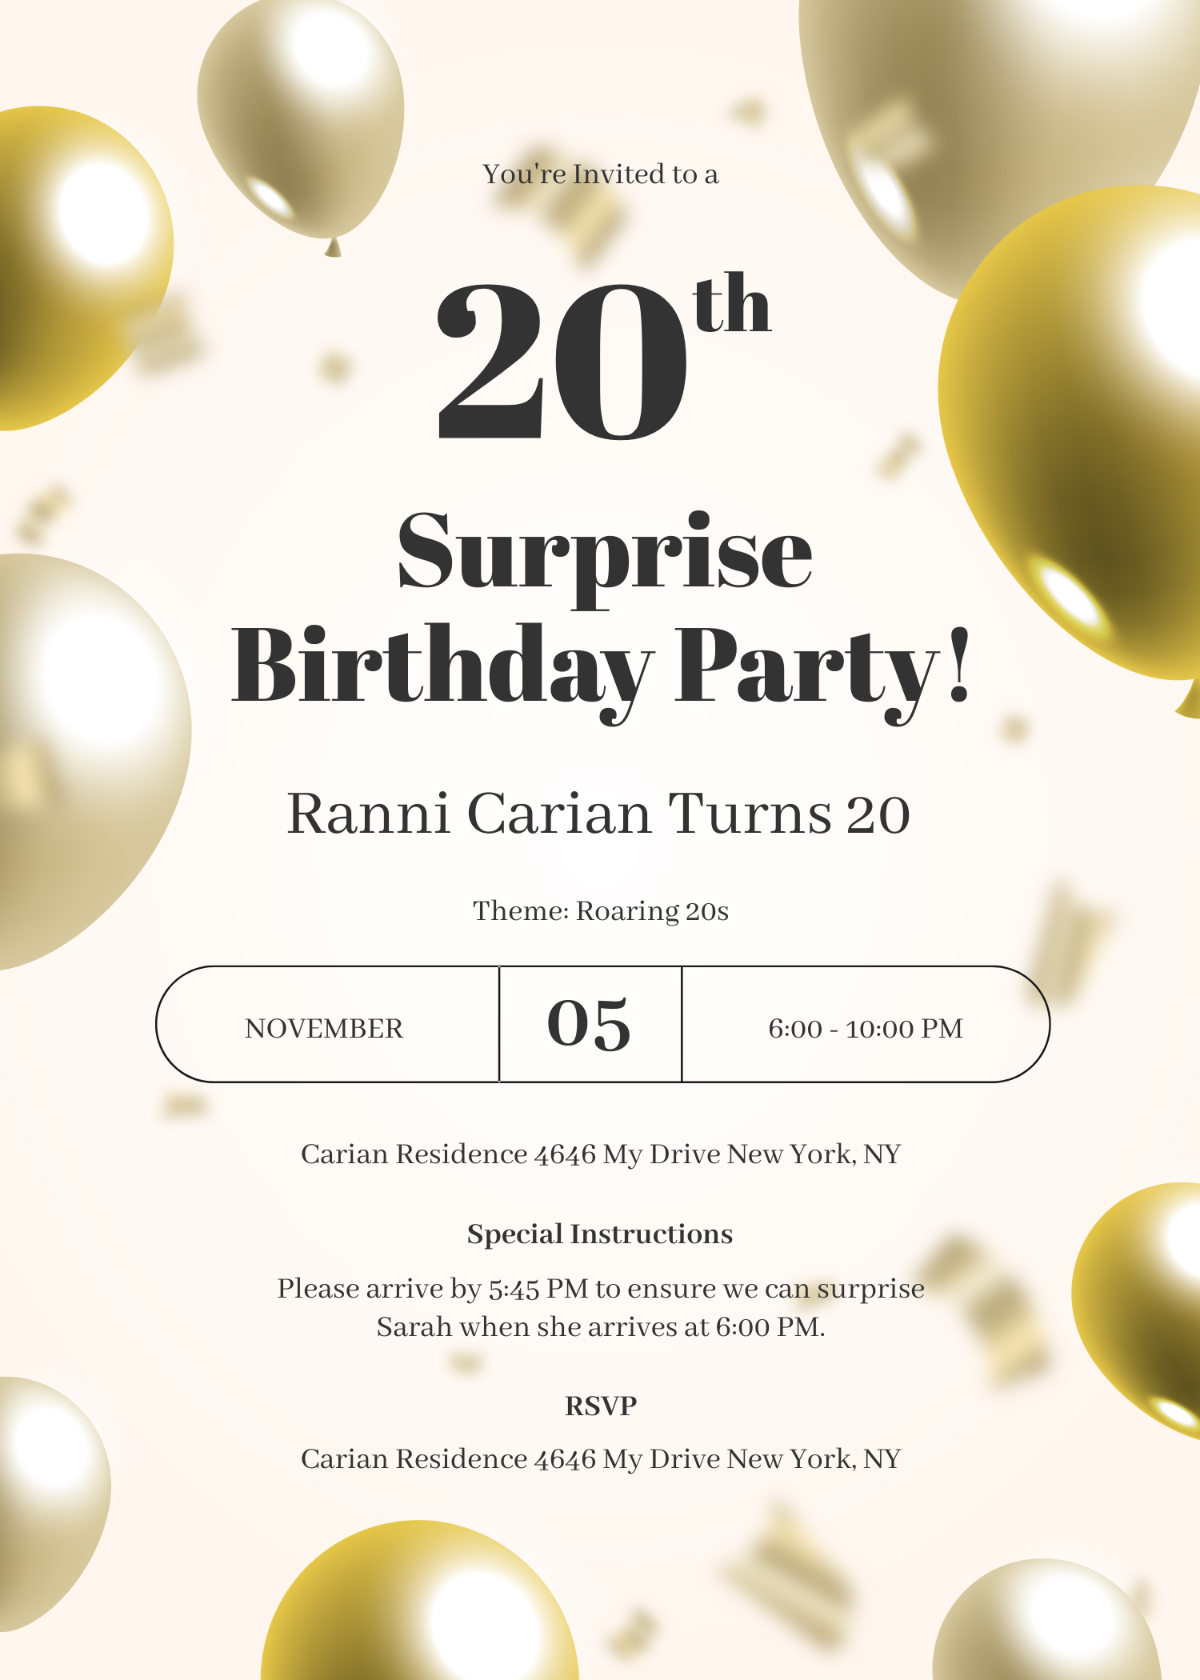 20th Surprise Birthday Party Invitation